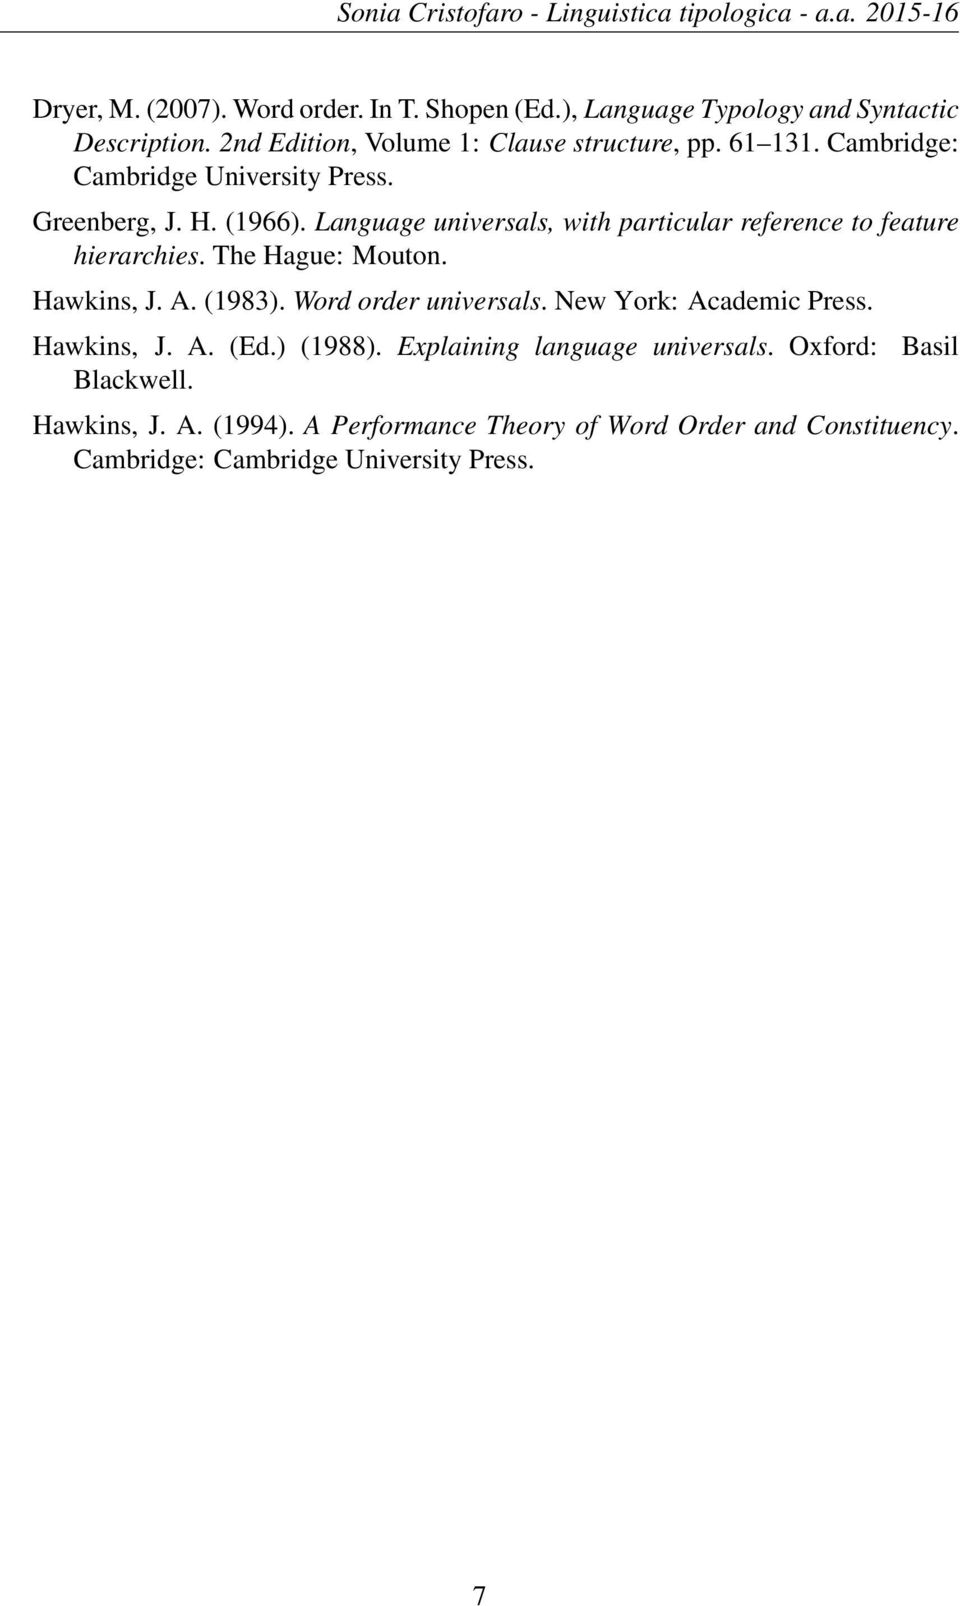 The Hague: Mouton. Hawkins, J. A. (1983). Word order universals. New York: Academic Press. Hawkins, J. A. (Ed.) (1988).